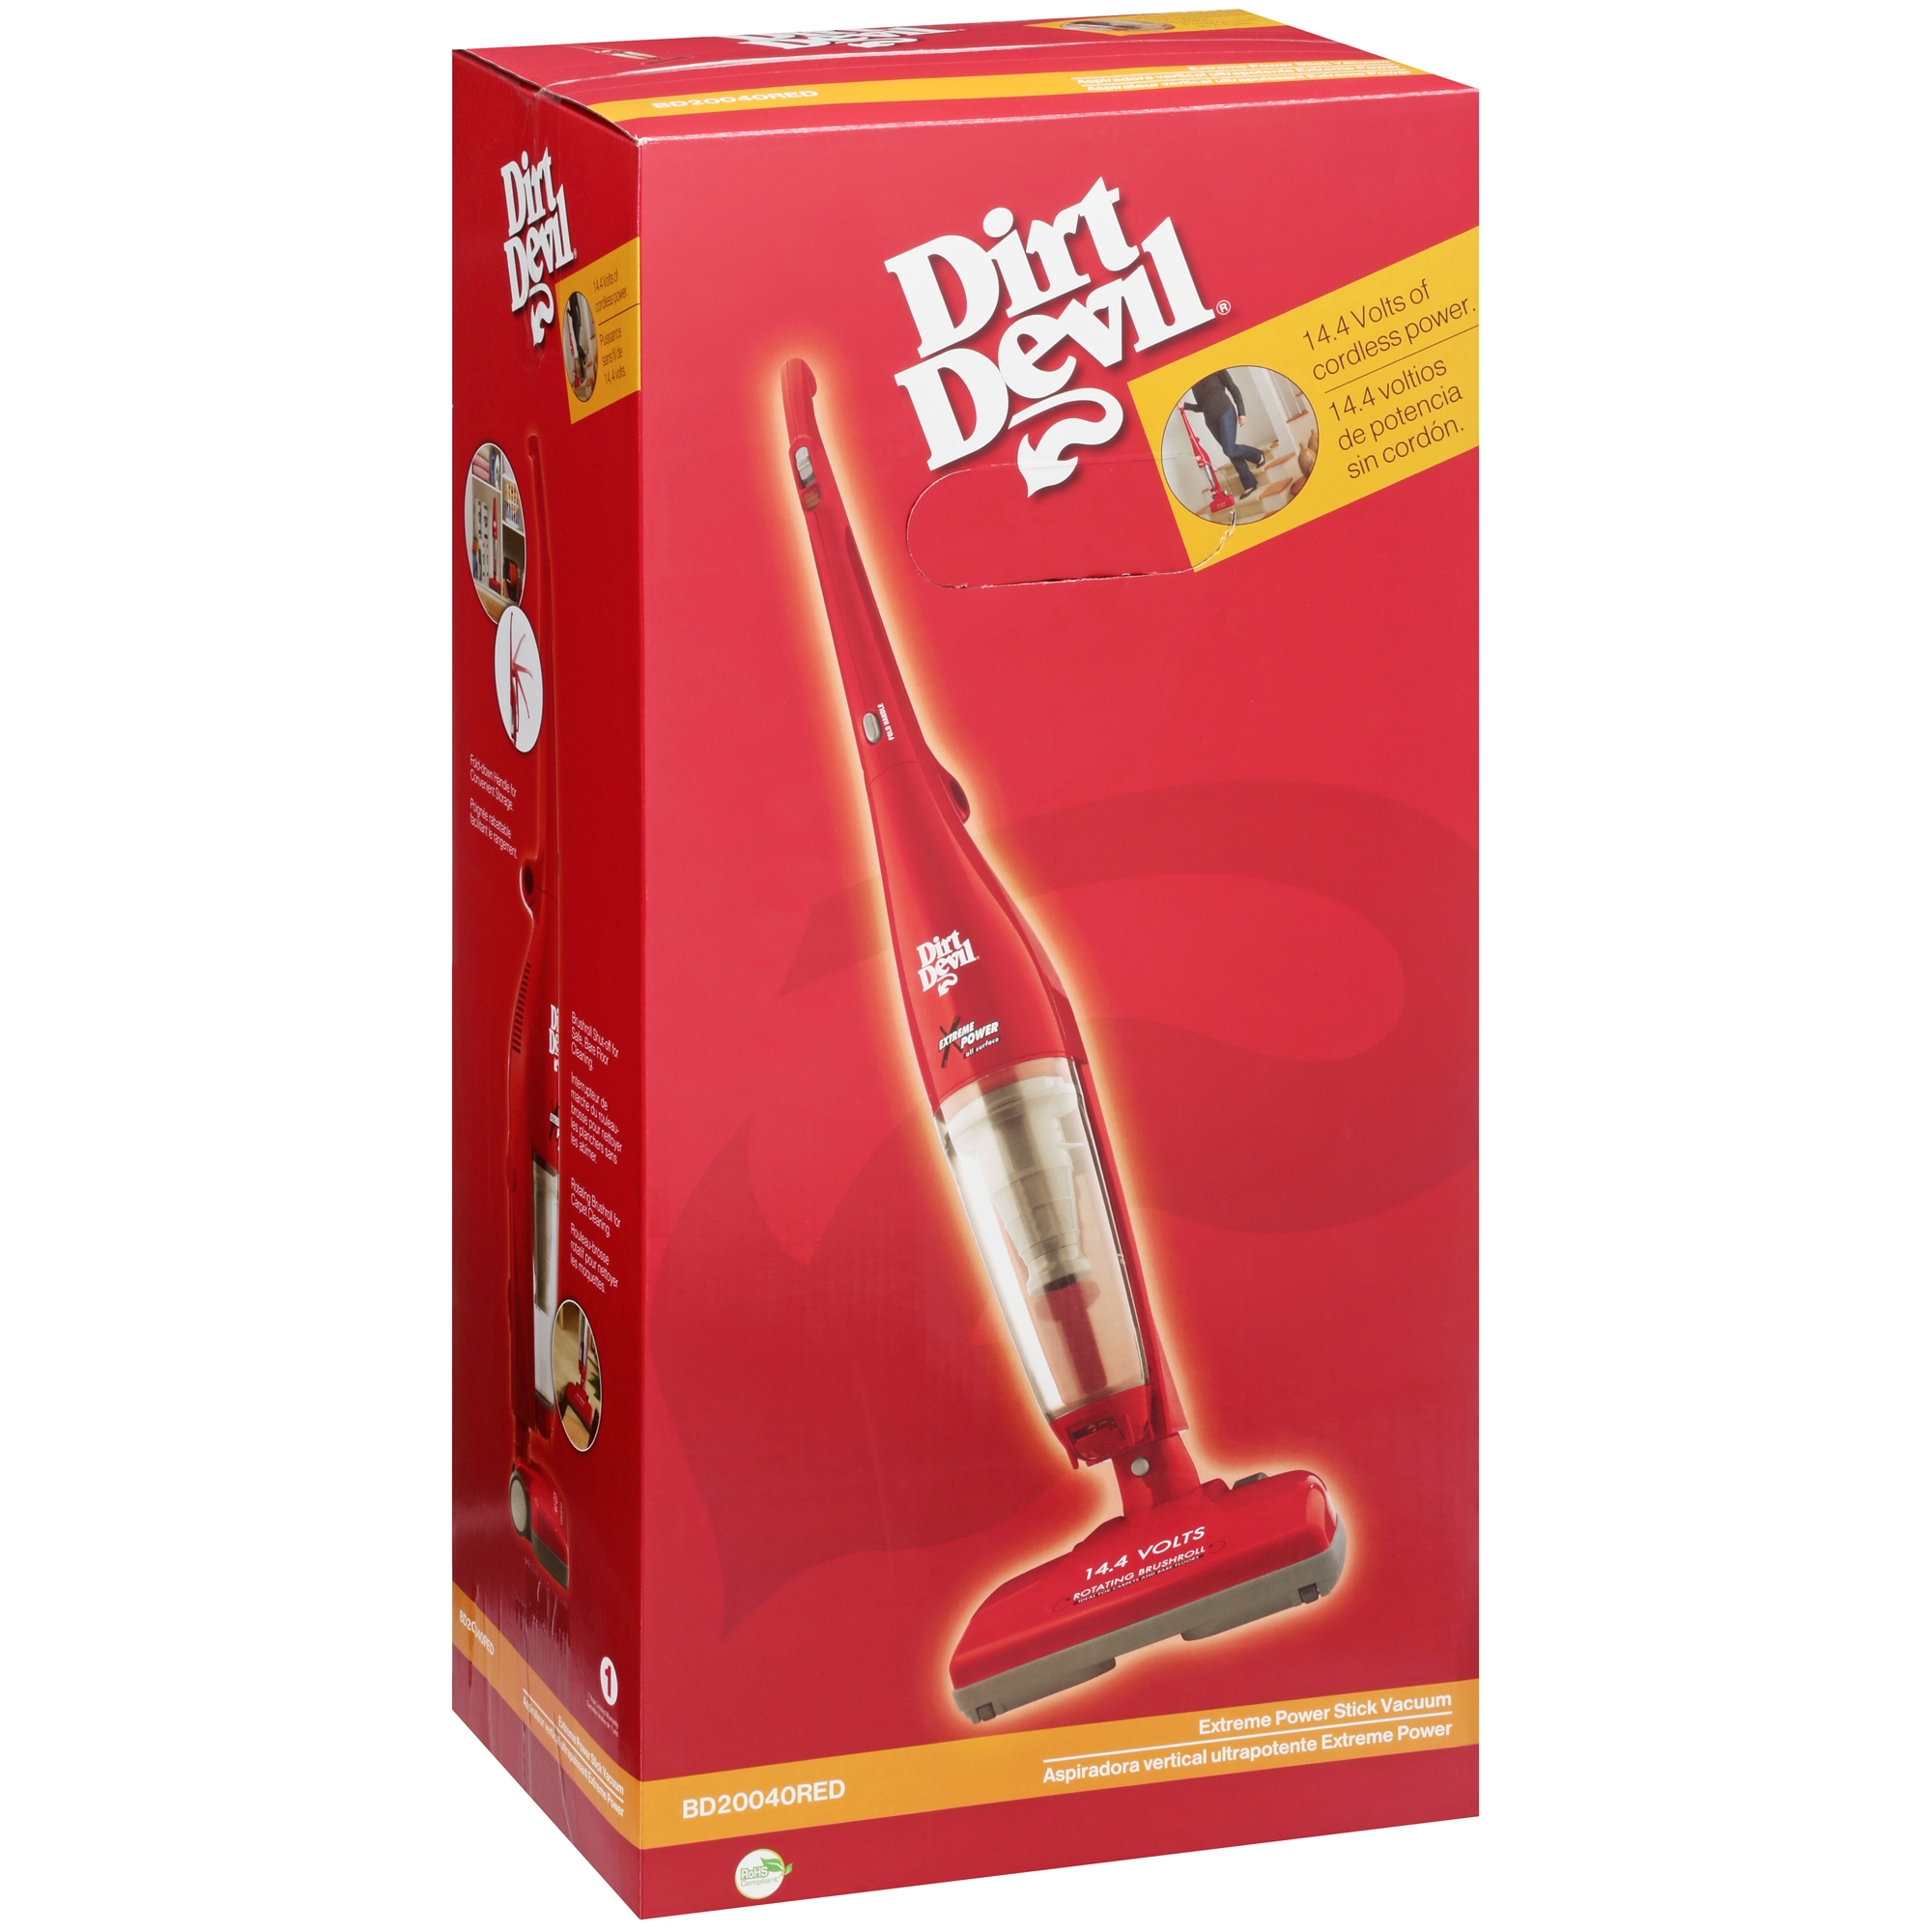 Dirt Devil Extreme Power 14.4V Cordless Bagless Stick Vacuum, BD20040RED - image 4 of 4